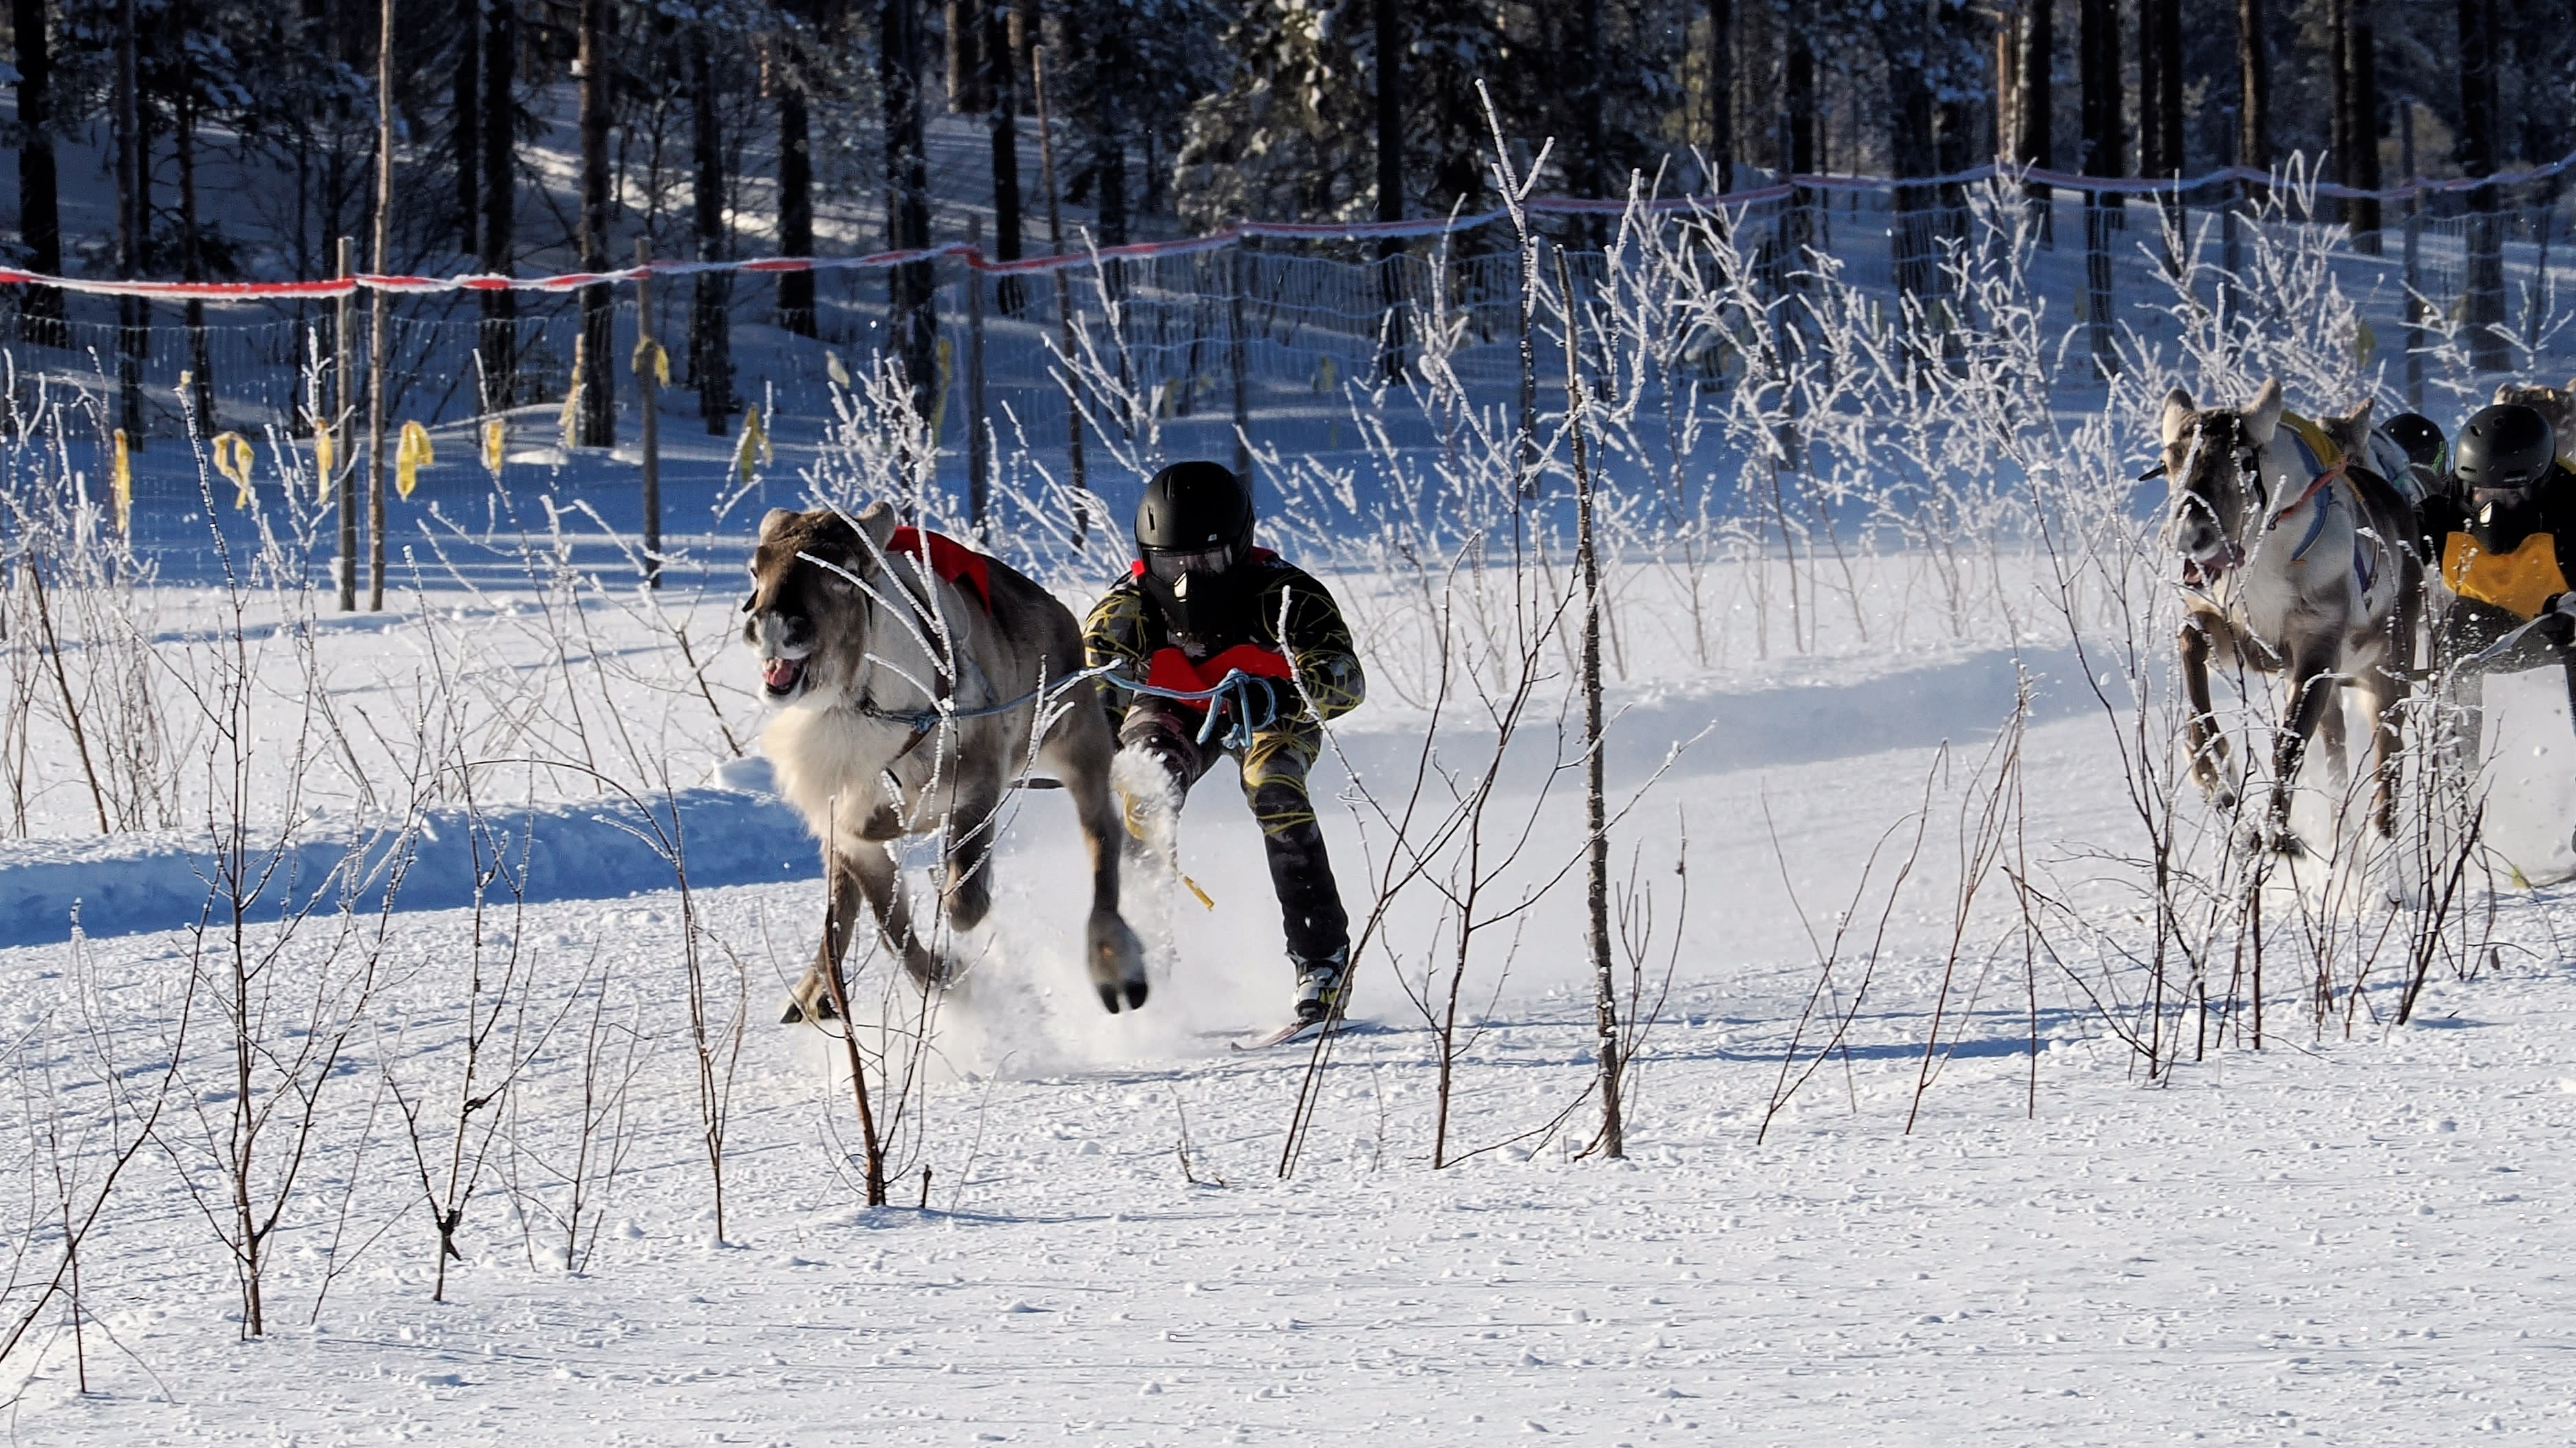 See: Reindeer racing season heats up in northern Finland